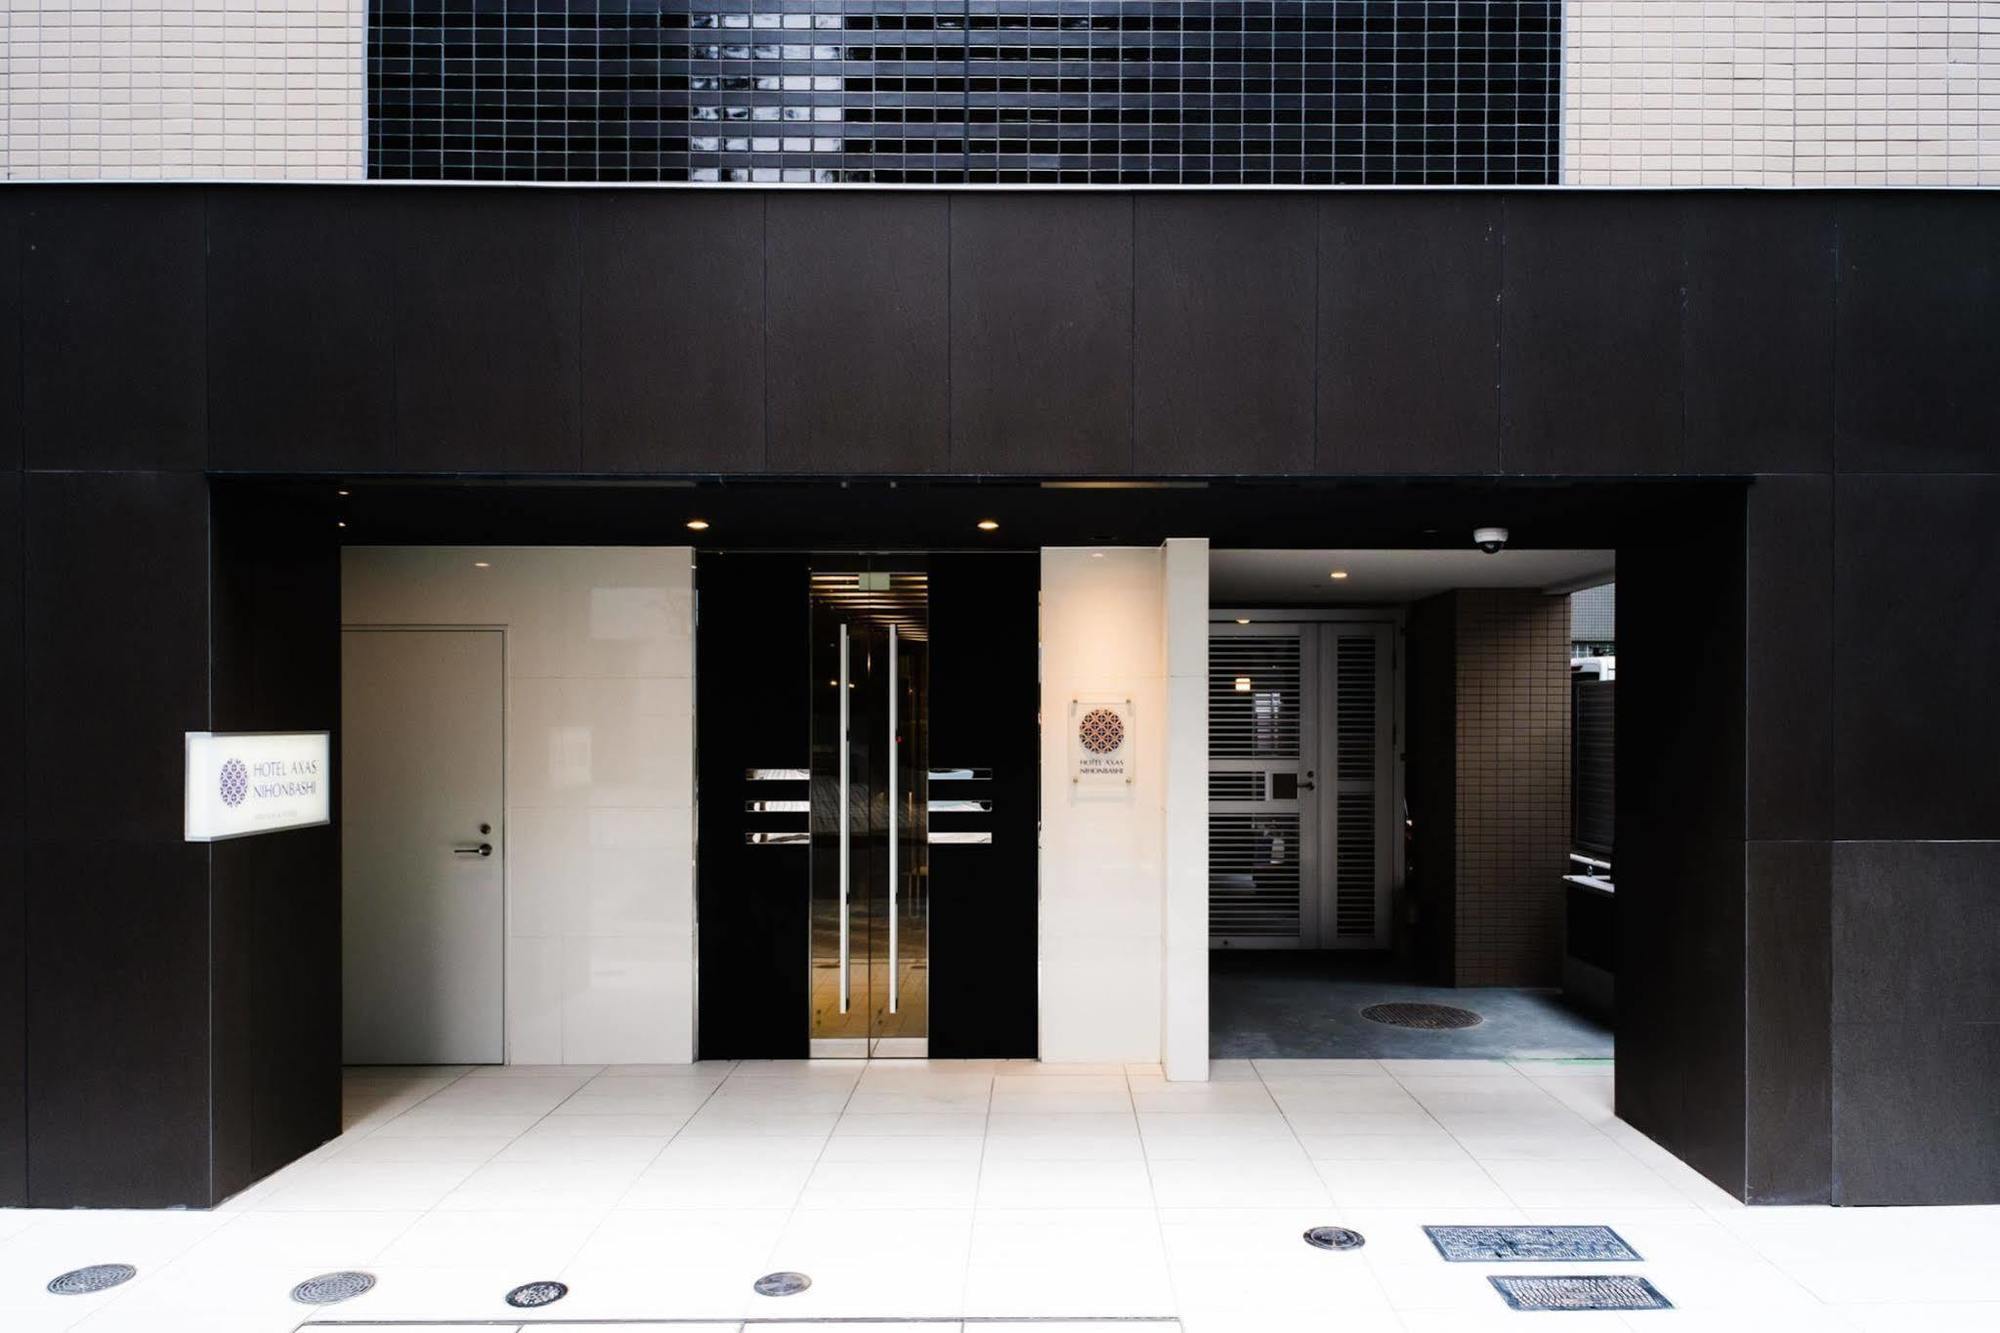 Hotel Axas Nihonbashi Tokio Exterior foto